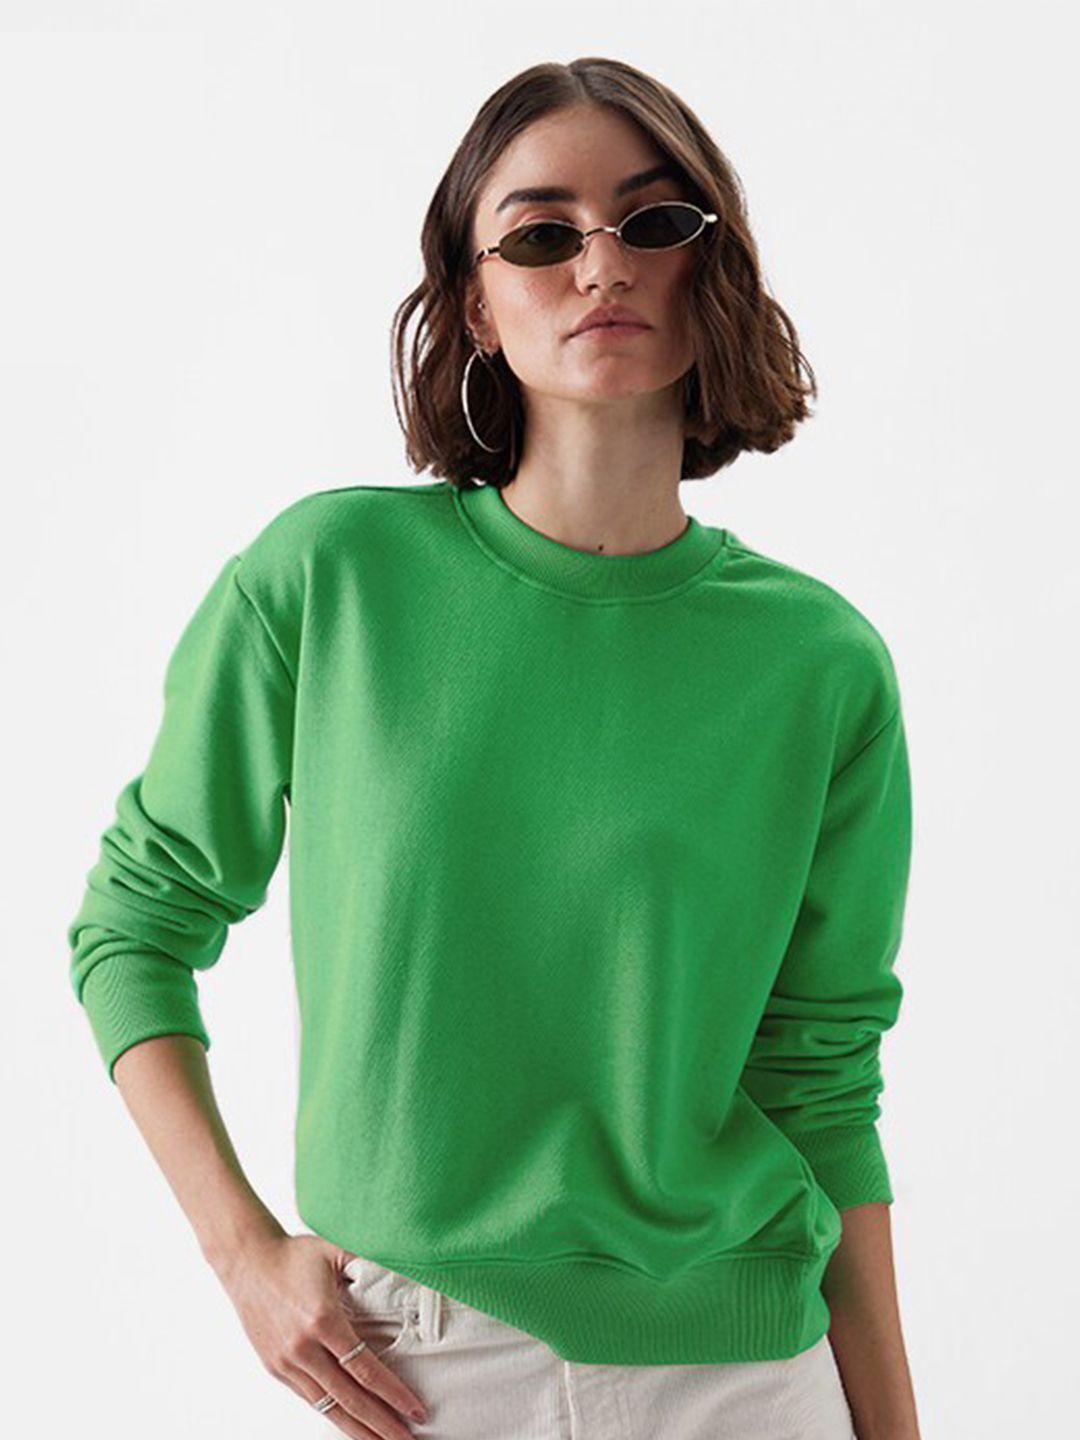 the souled store women green sweatshirt